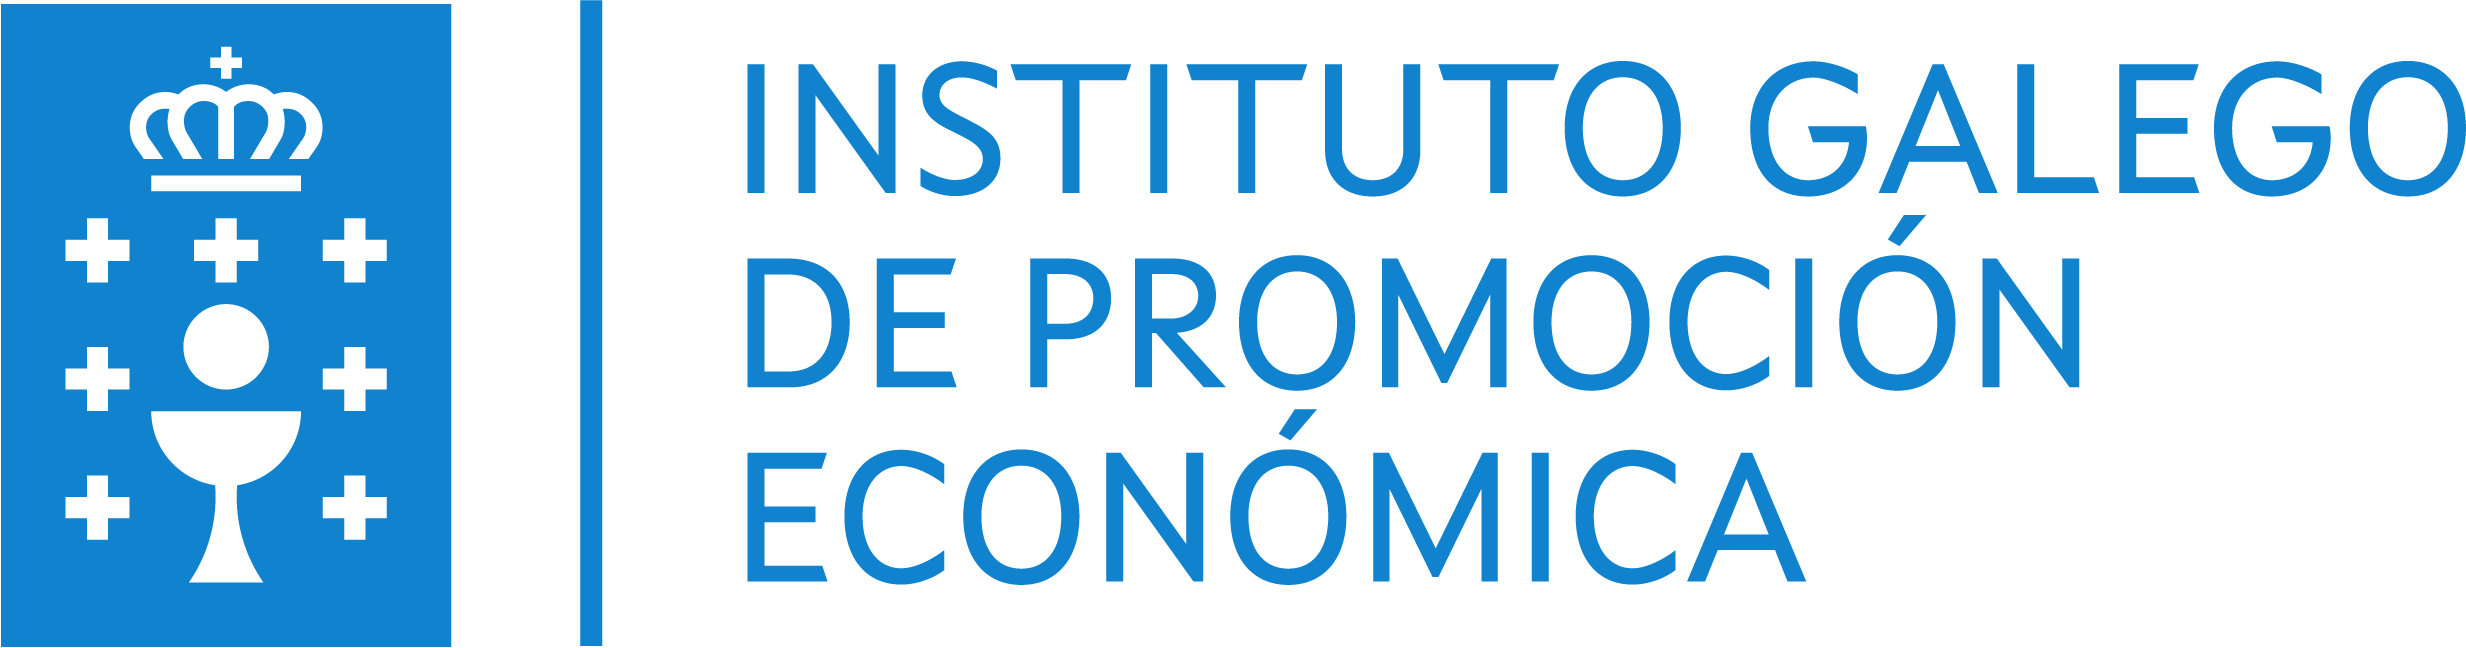 Logo igape promocion economica